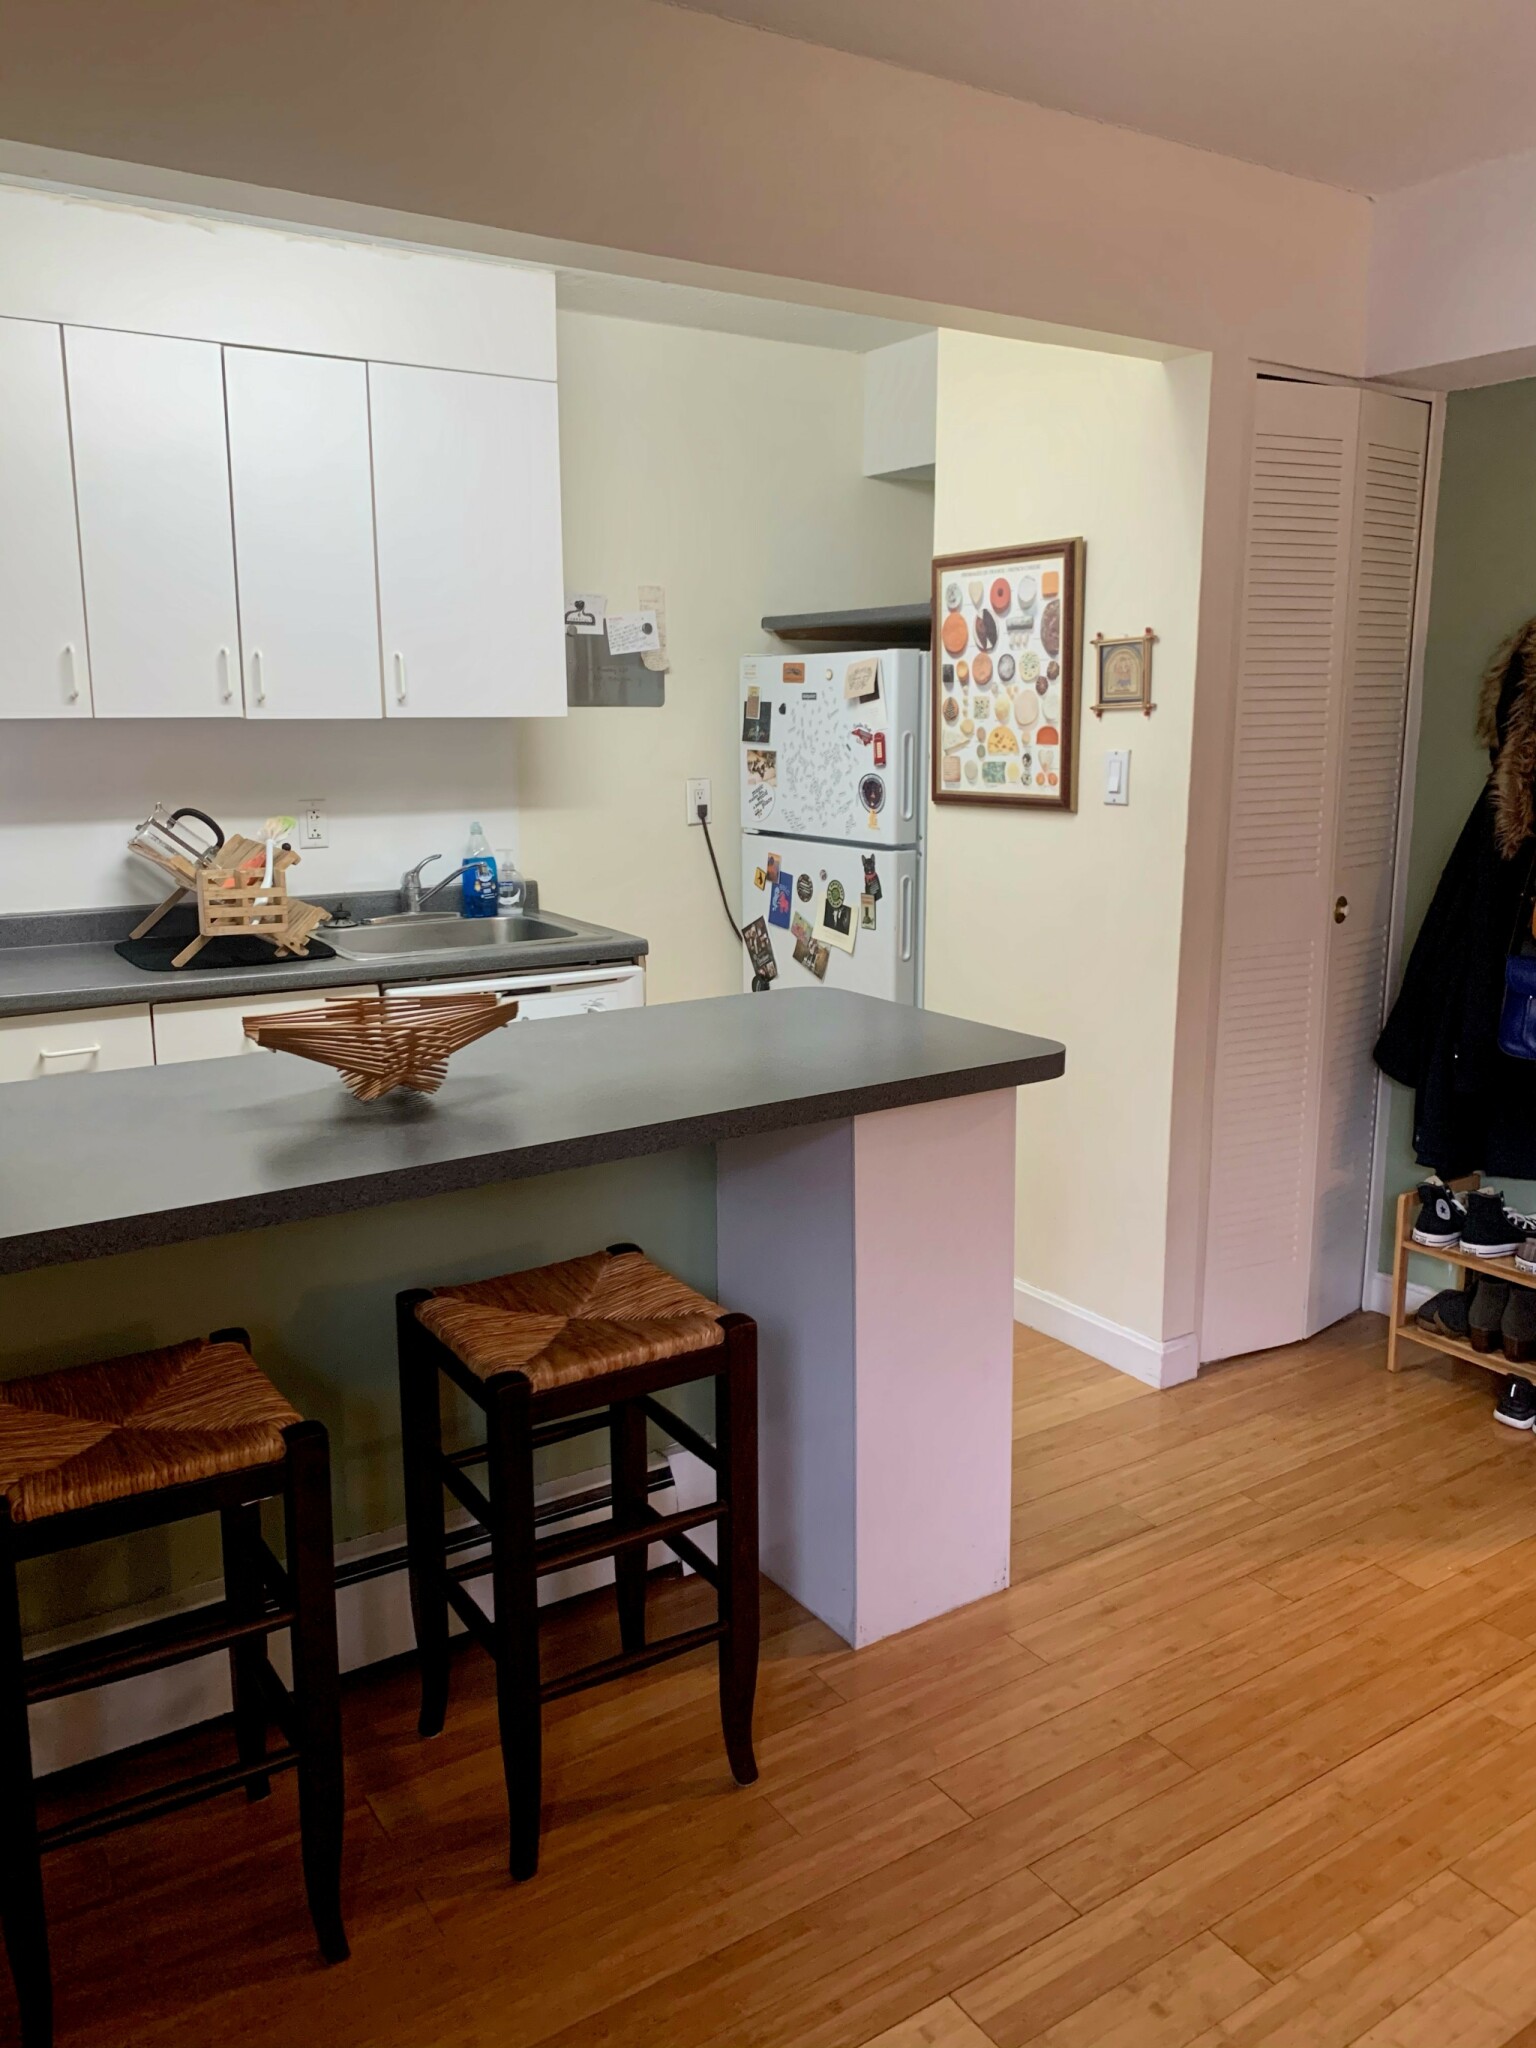 Photos of apartment on Trowbridge,Cambridge MA 02138